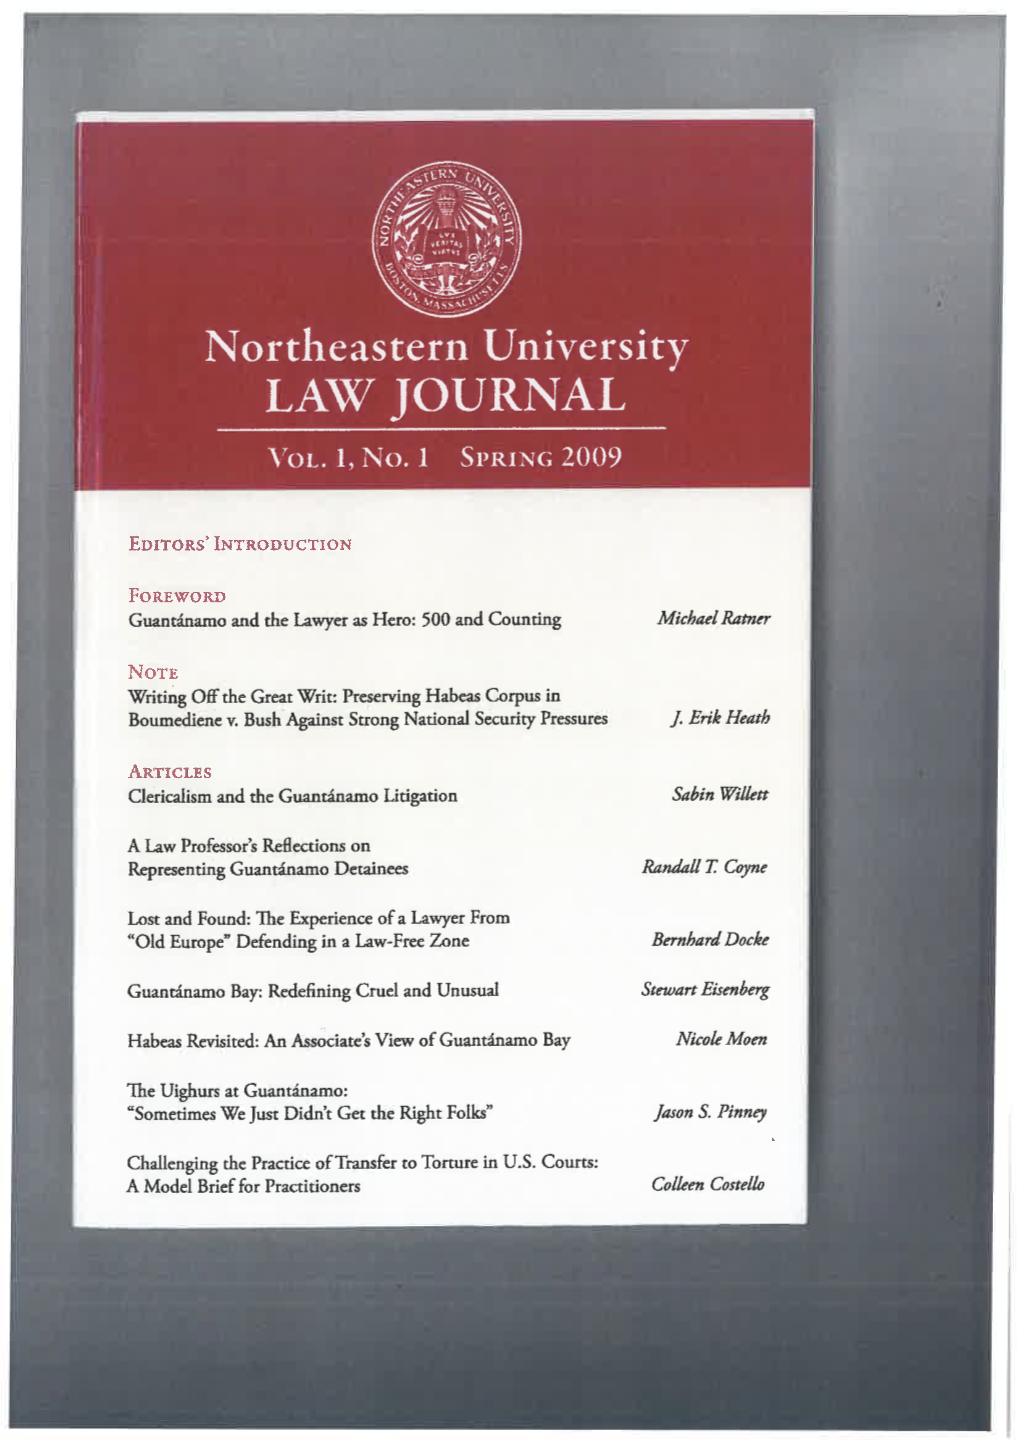 Law Journal Vol